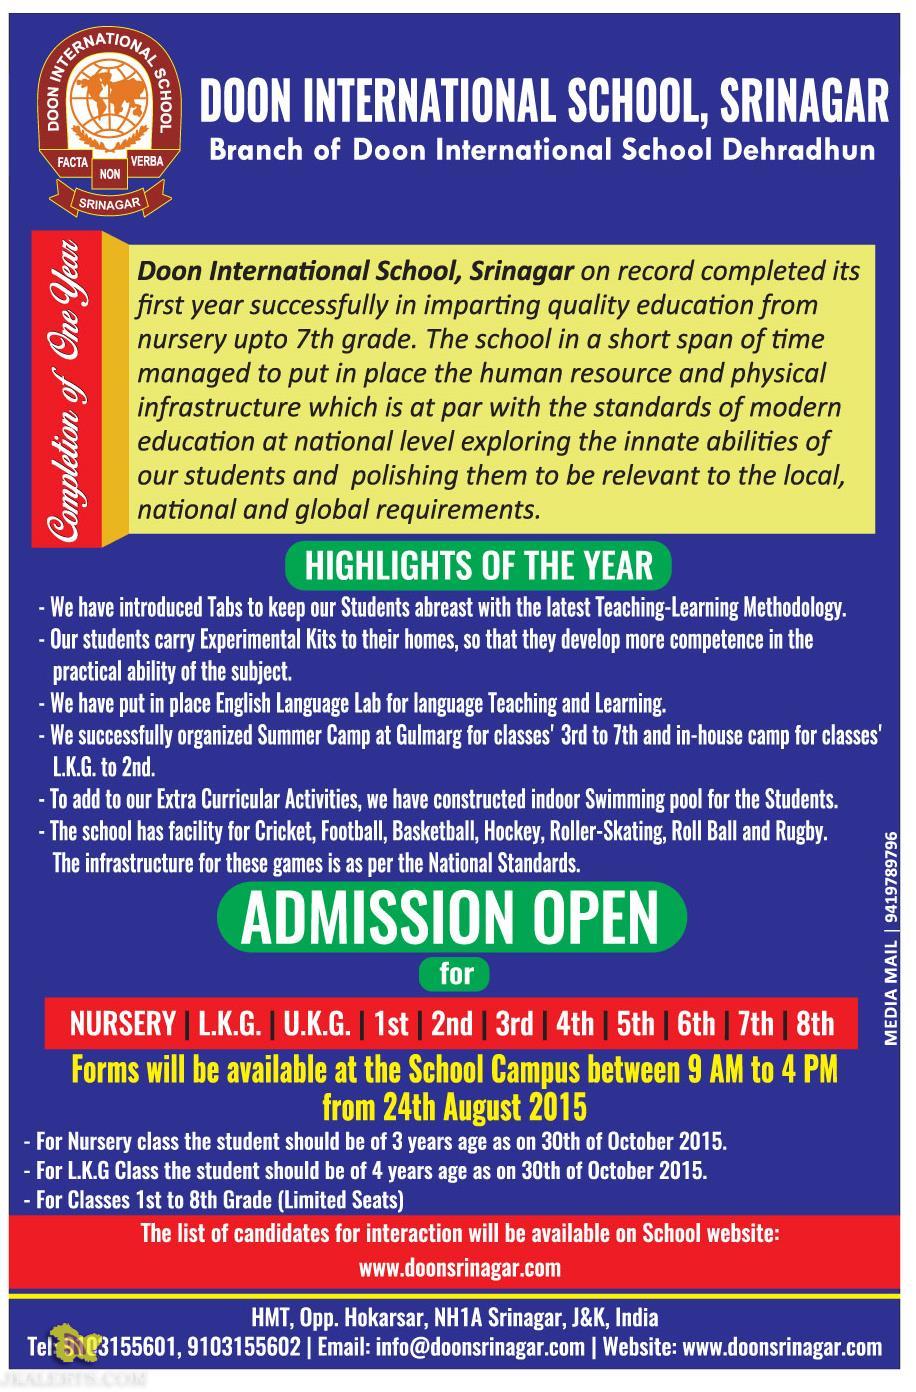 Admission open in DOON INTERNATIONAL SCHOOL, SRINAGAR